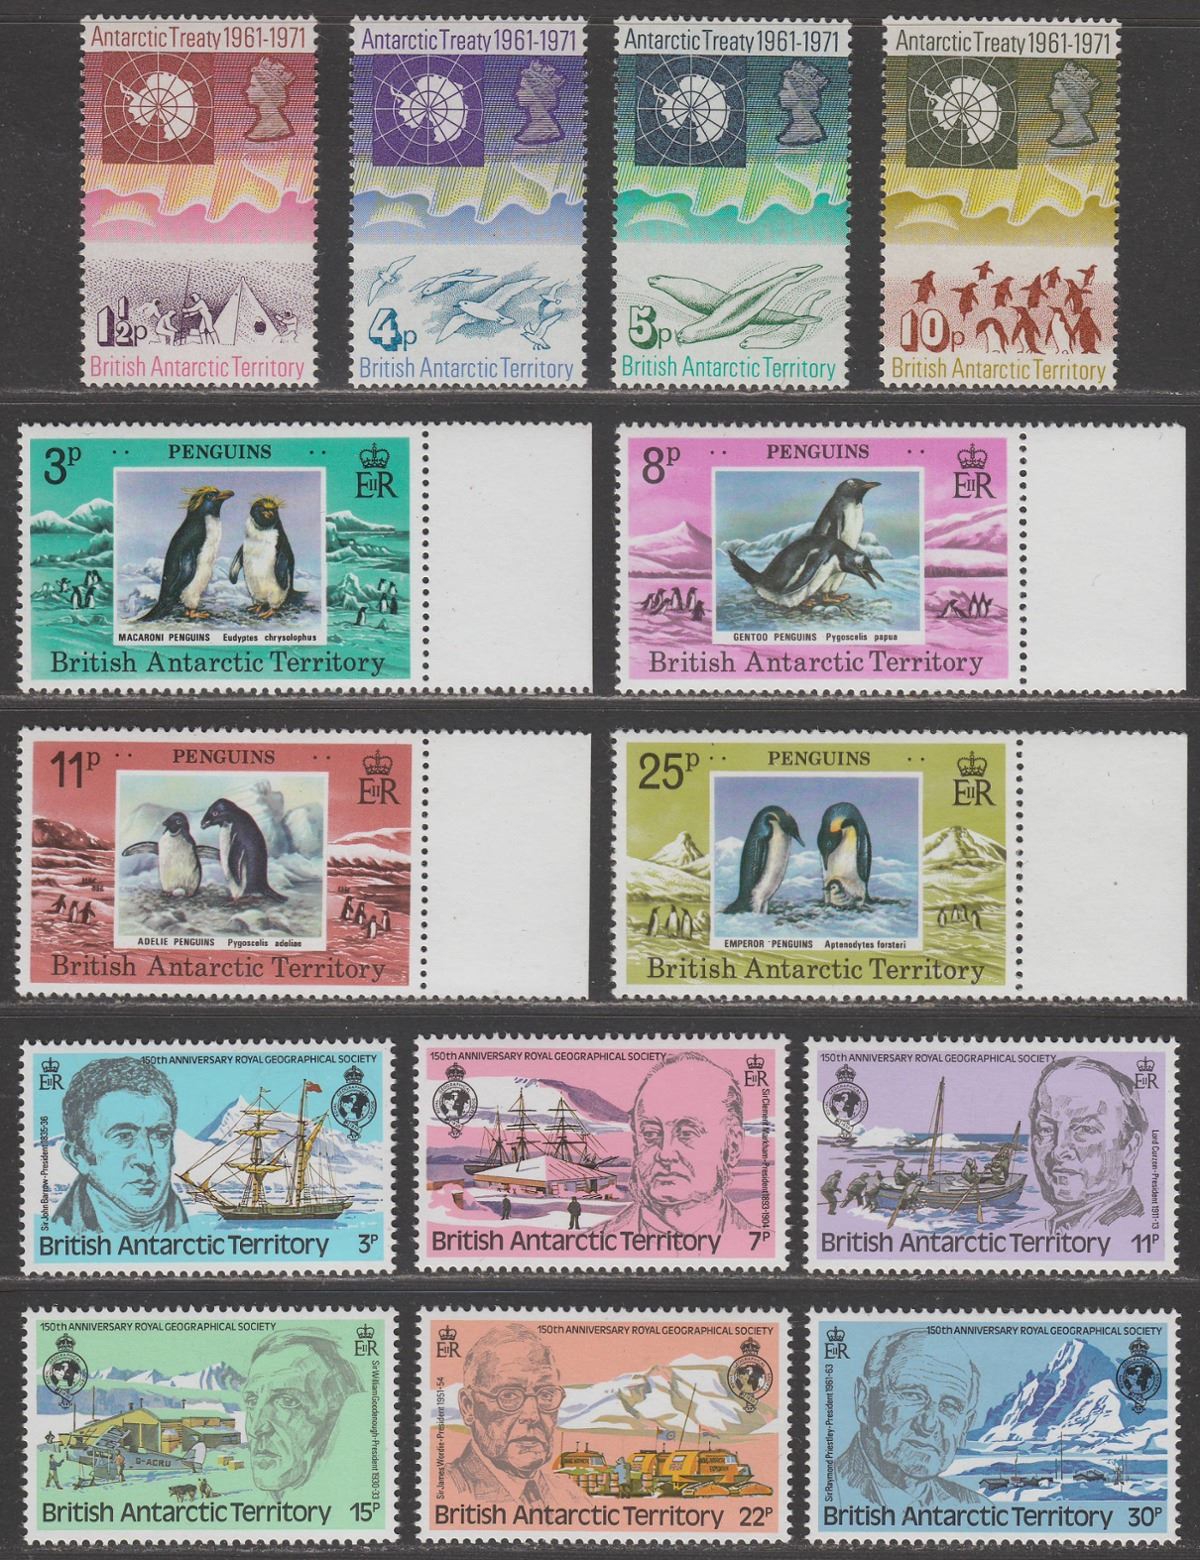 British Antarctic Territory 1971-80 QEII Treaty / Penguins / RGS Sets Mint c £64